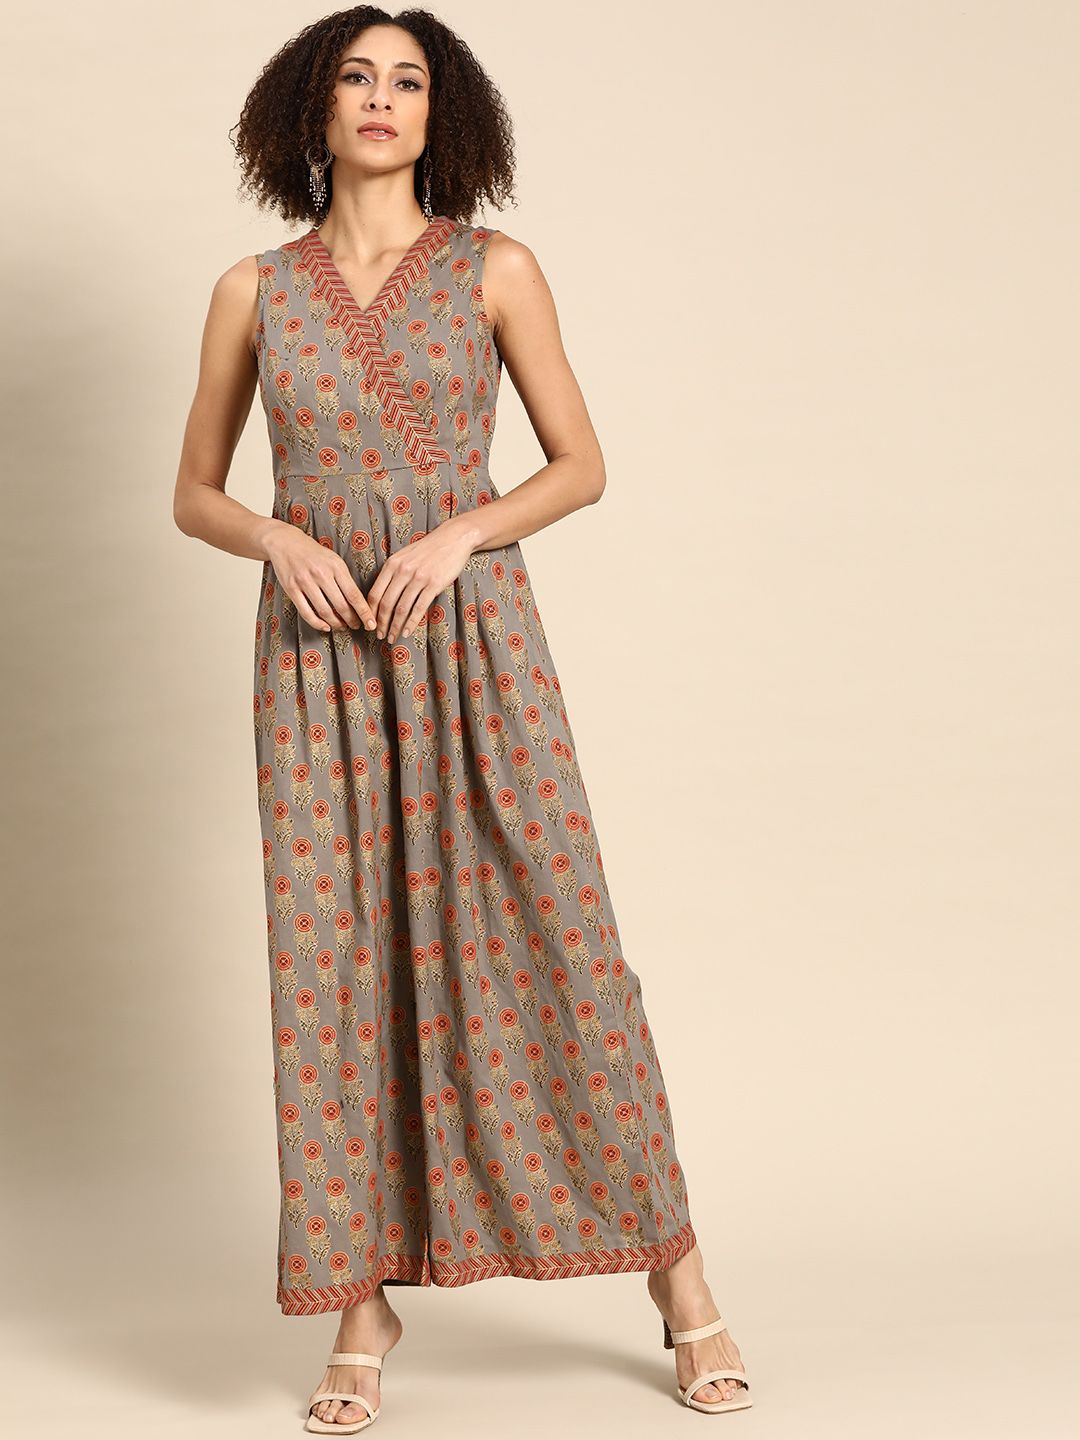 MABISH by Sonal Jain Grey & Rust Orange Printed Kalidar Jumpsuit Price in India